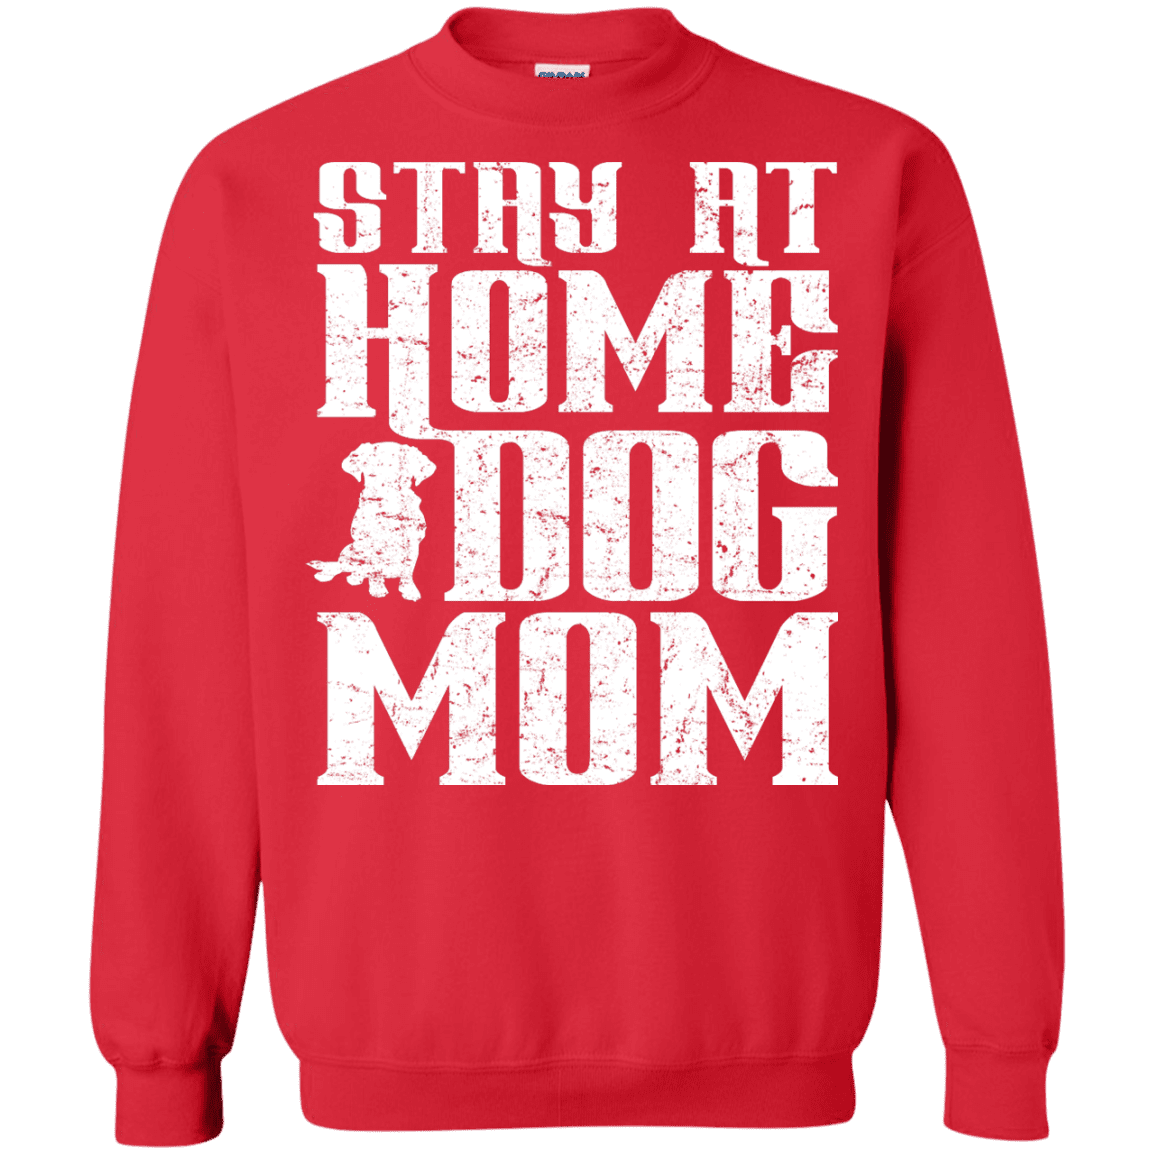 Stay At Home Dog Mom - Sweatshirt.